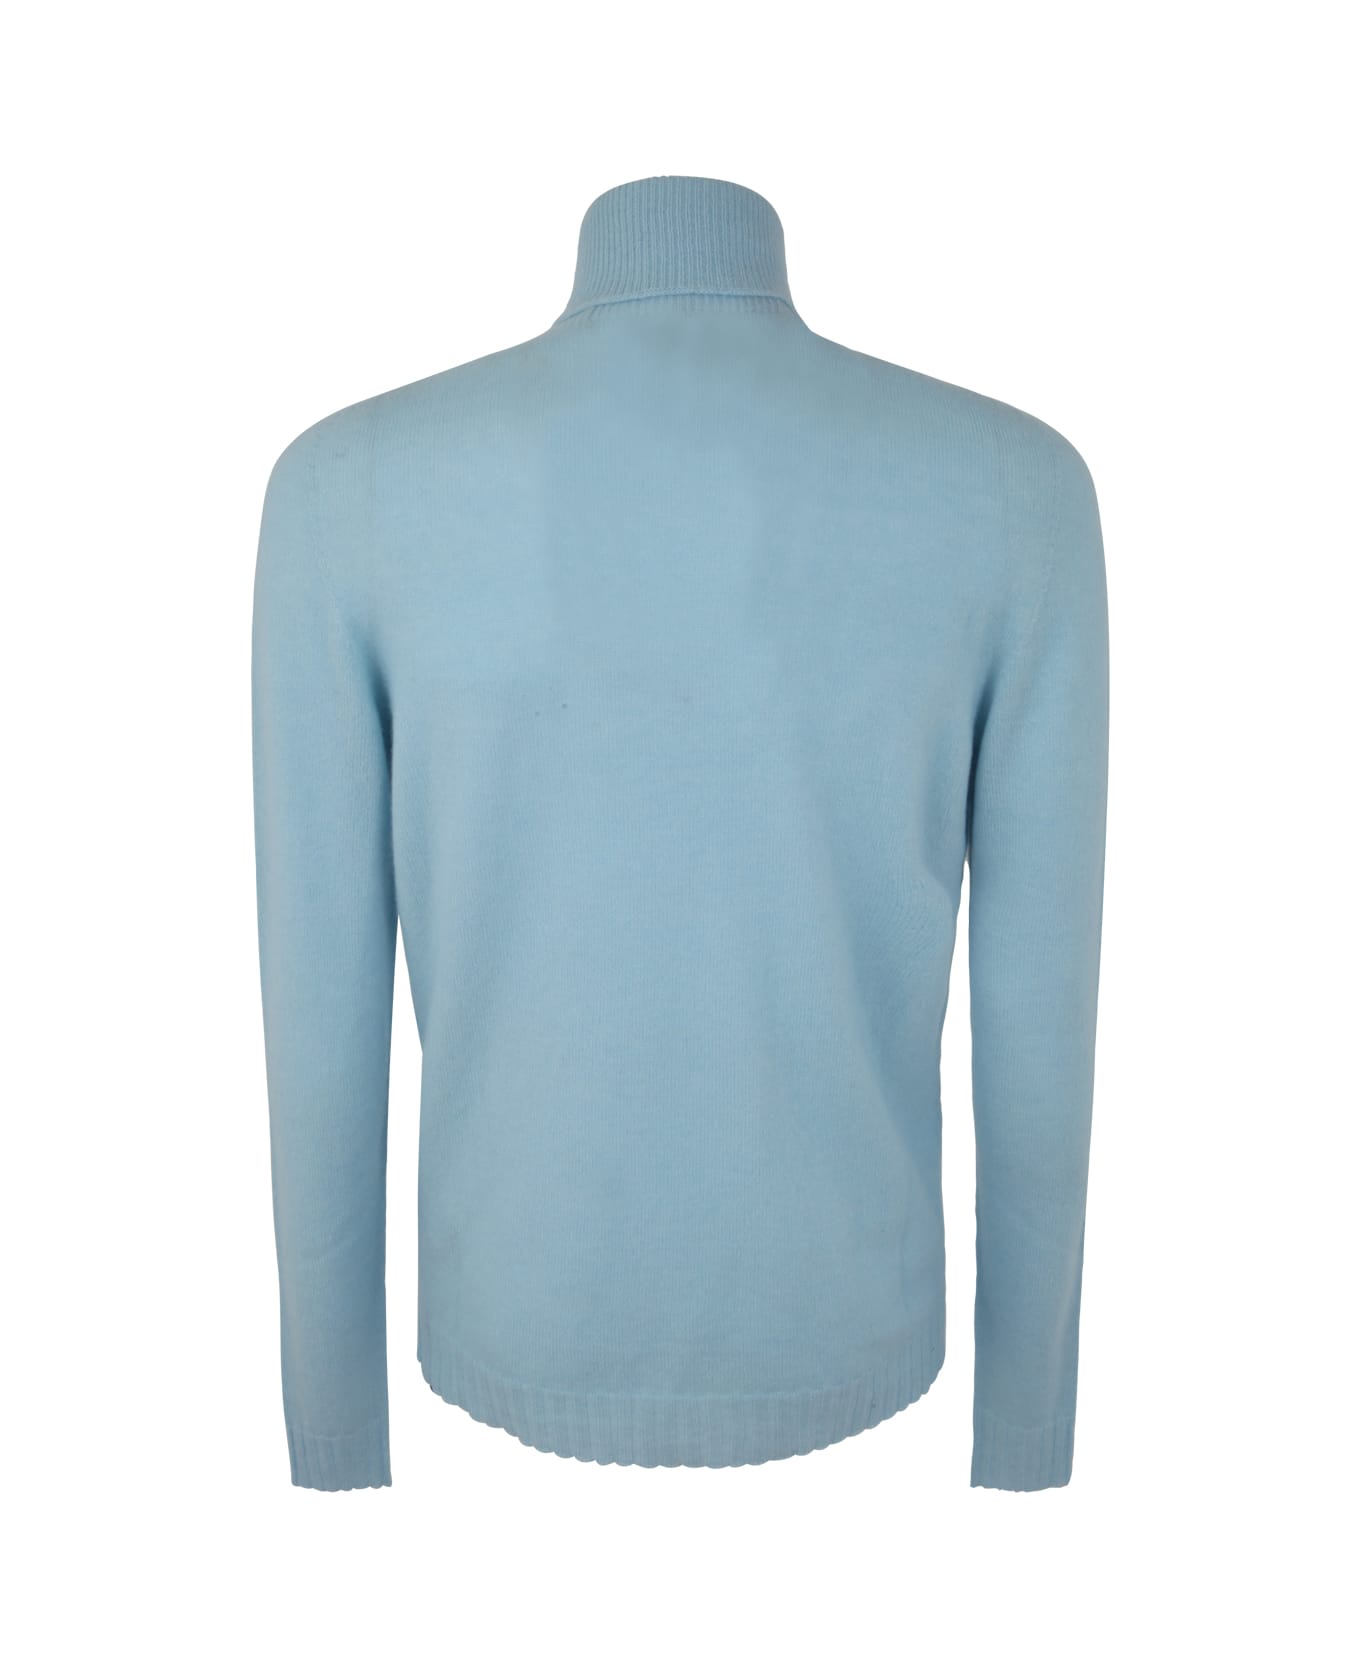 MD75 Cashmere Turtle Neck Sweater - Light Blue